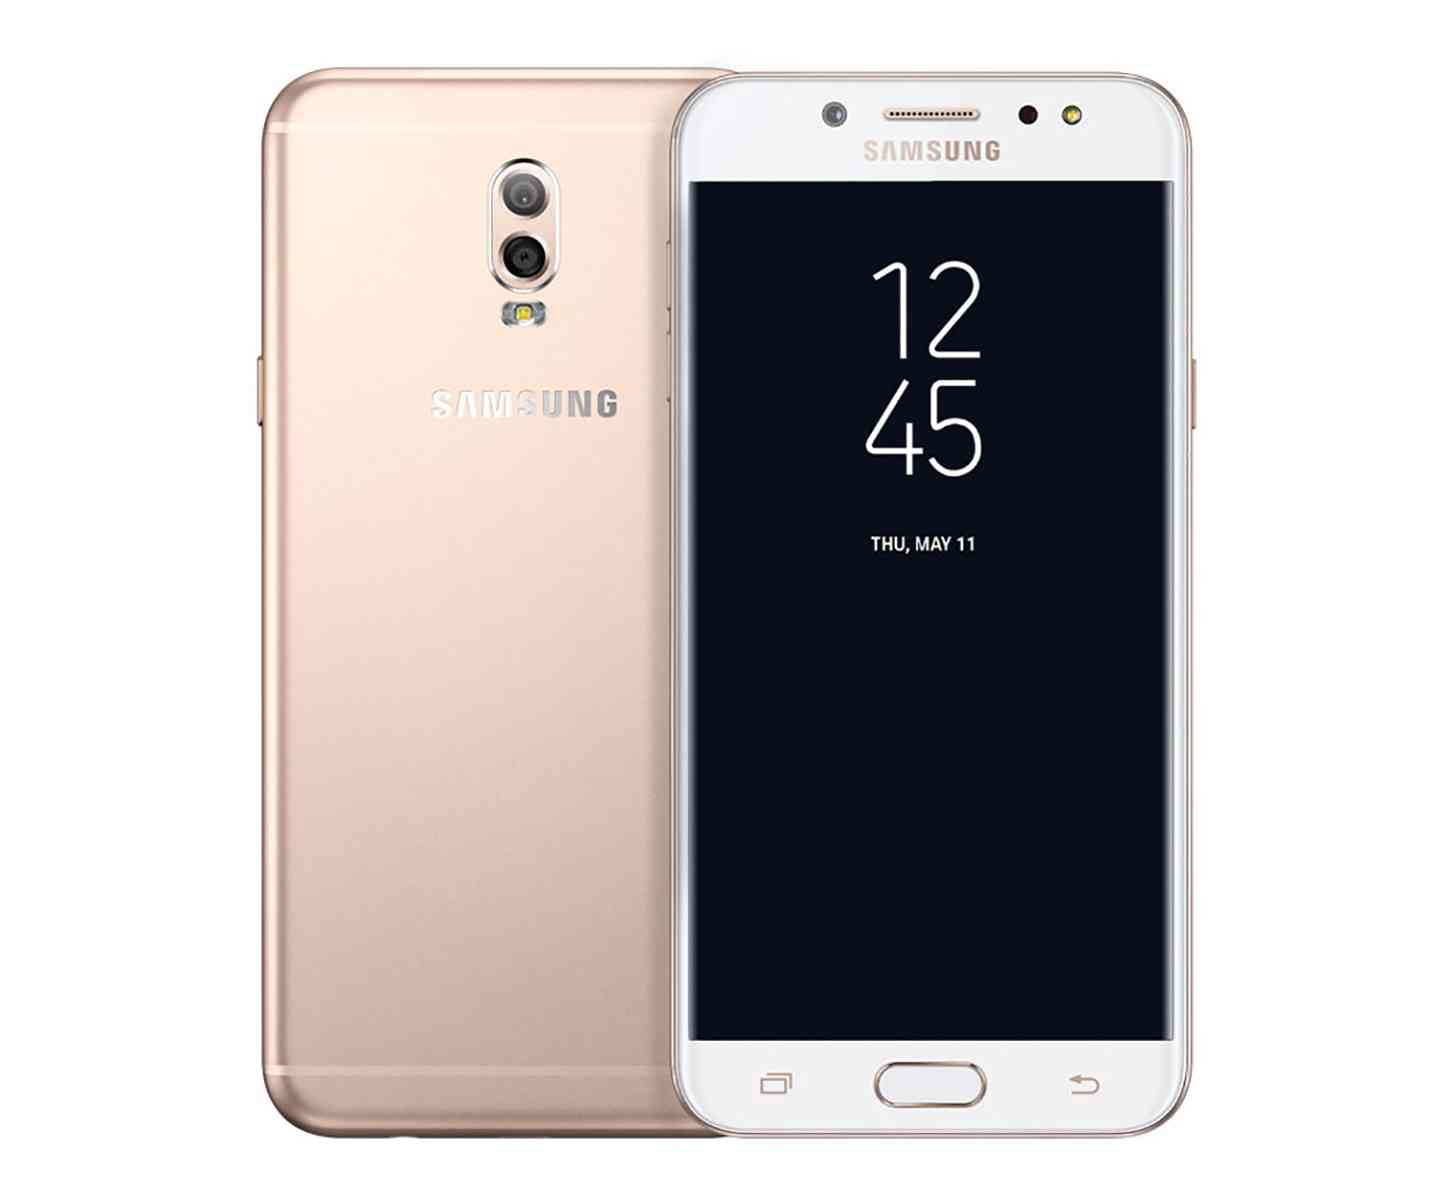 Samsung Galaxy J7+ official